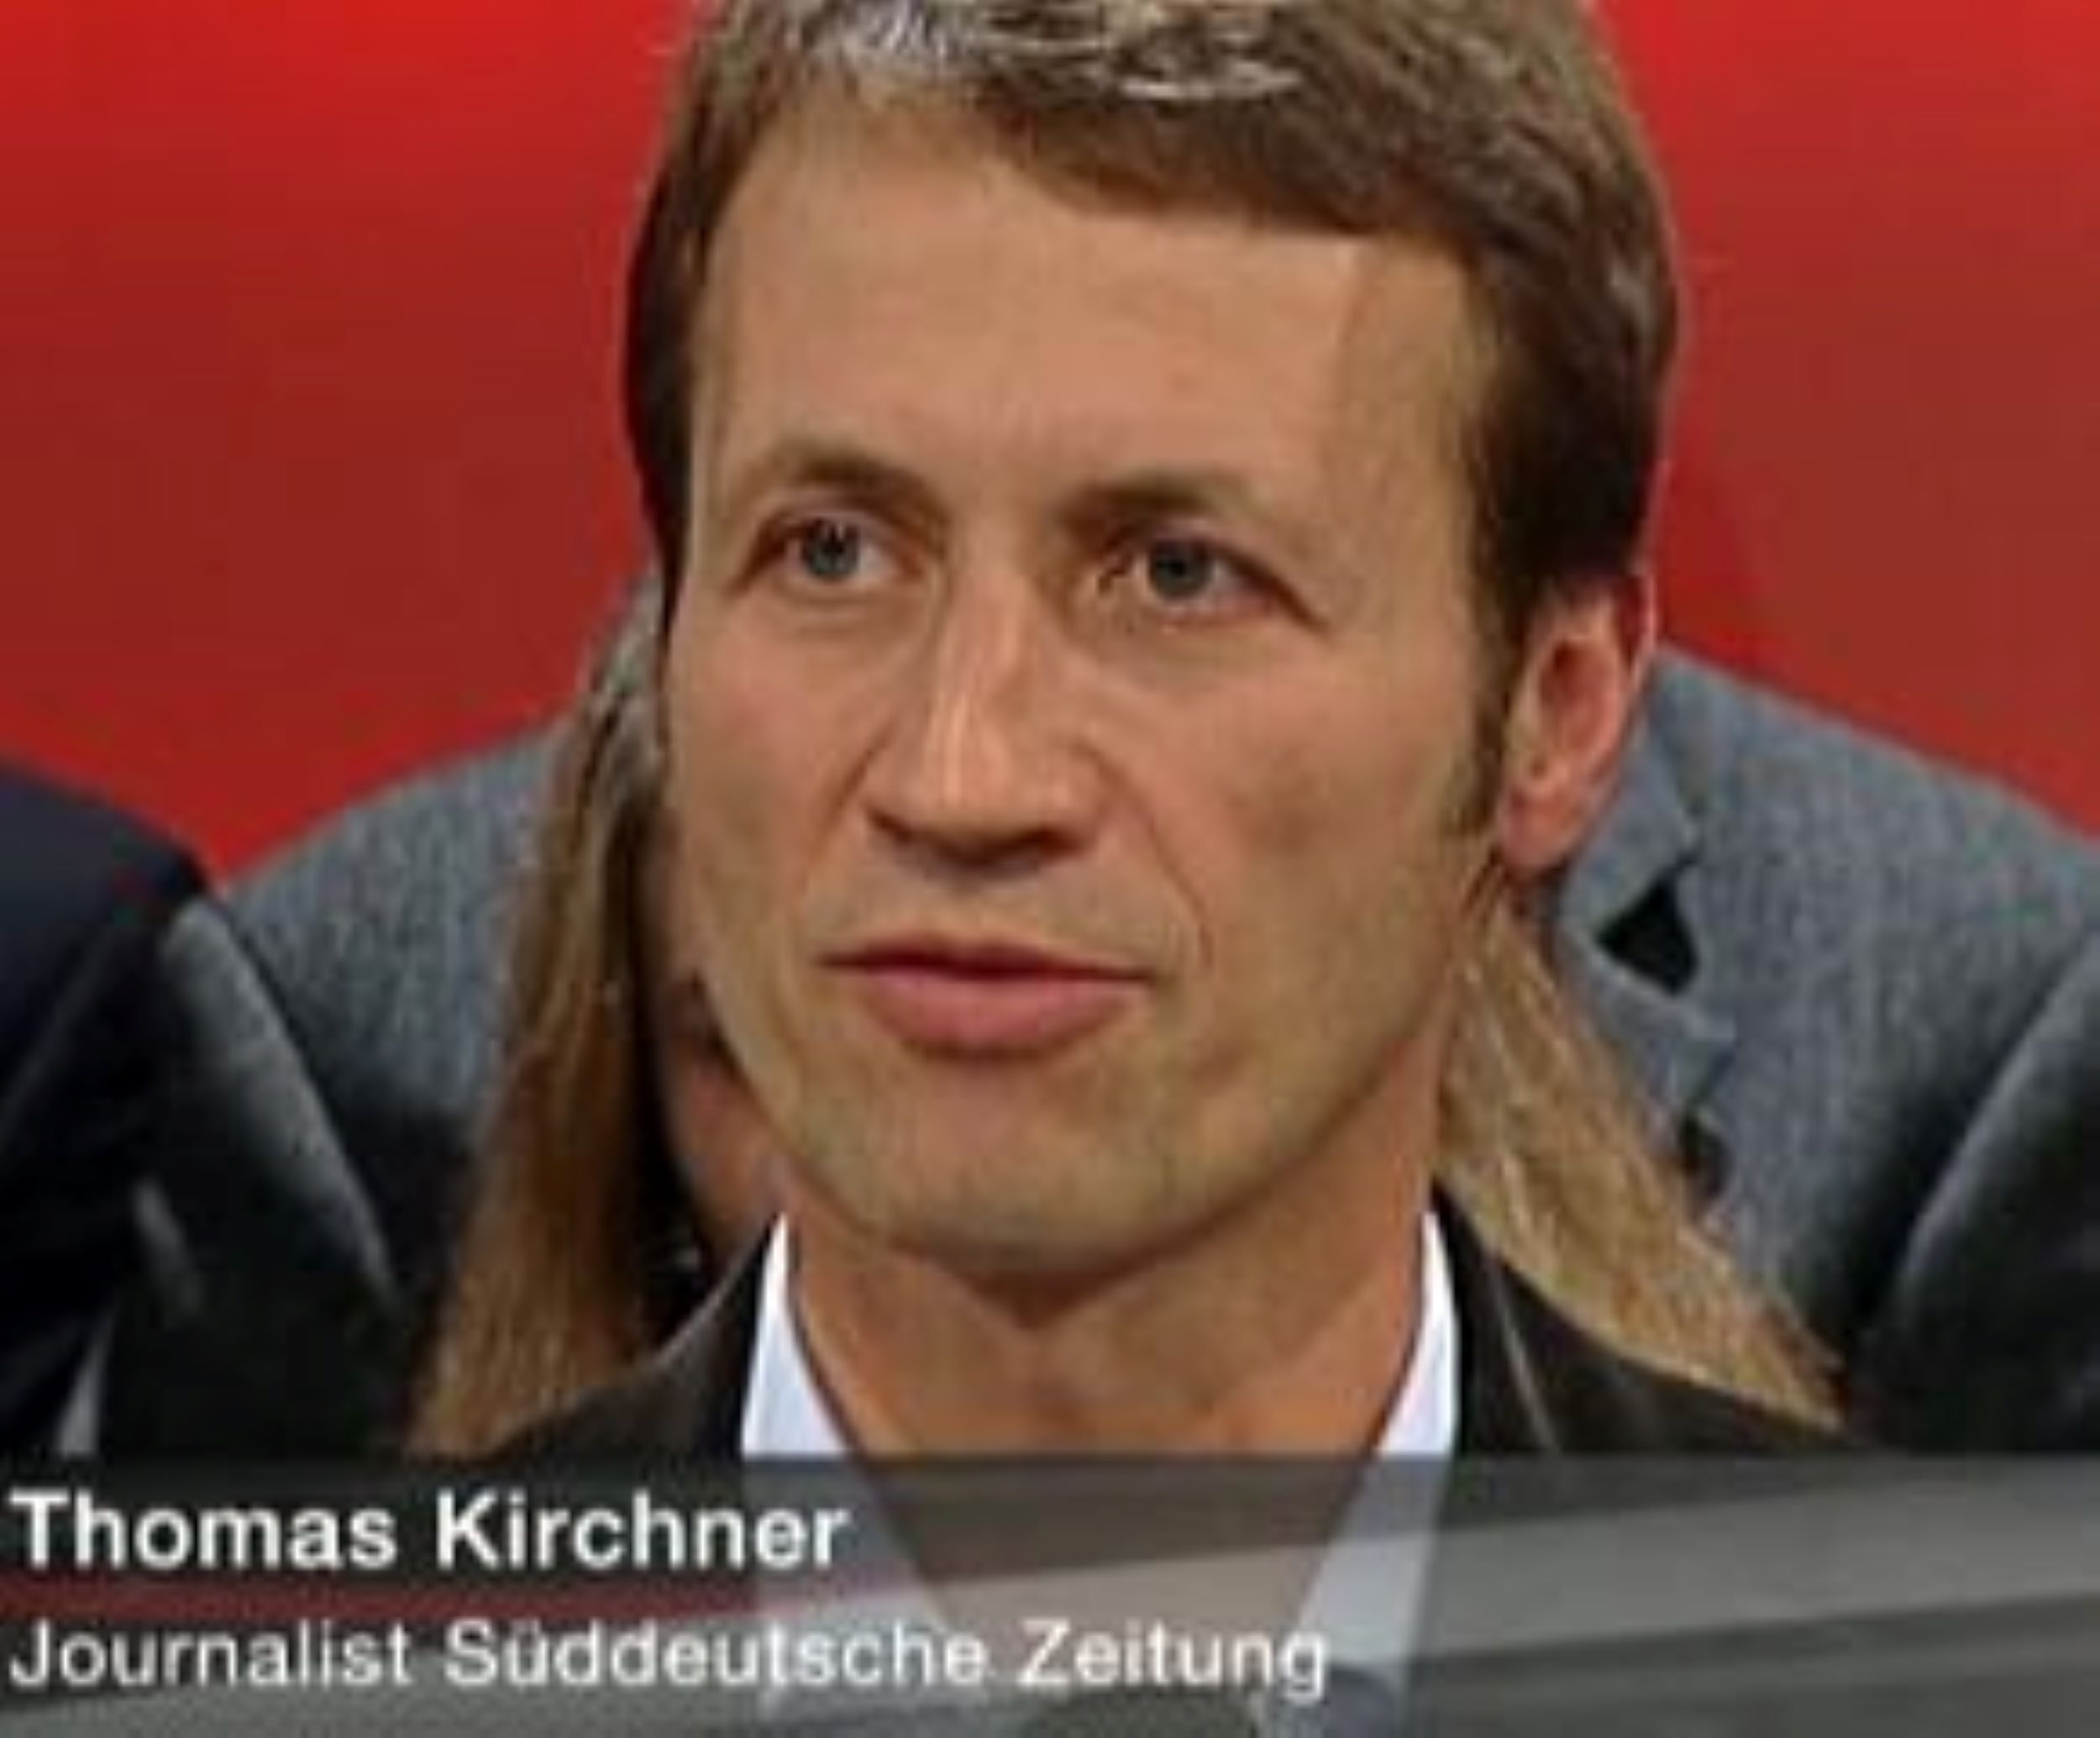 Thomas Kirchner